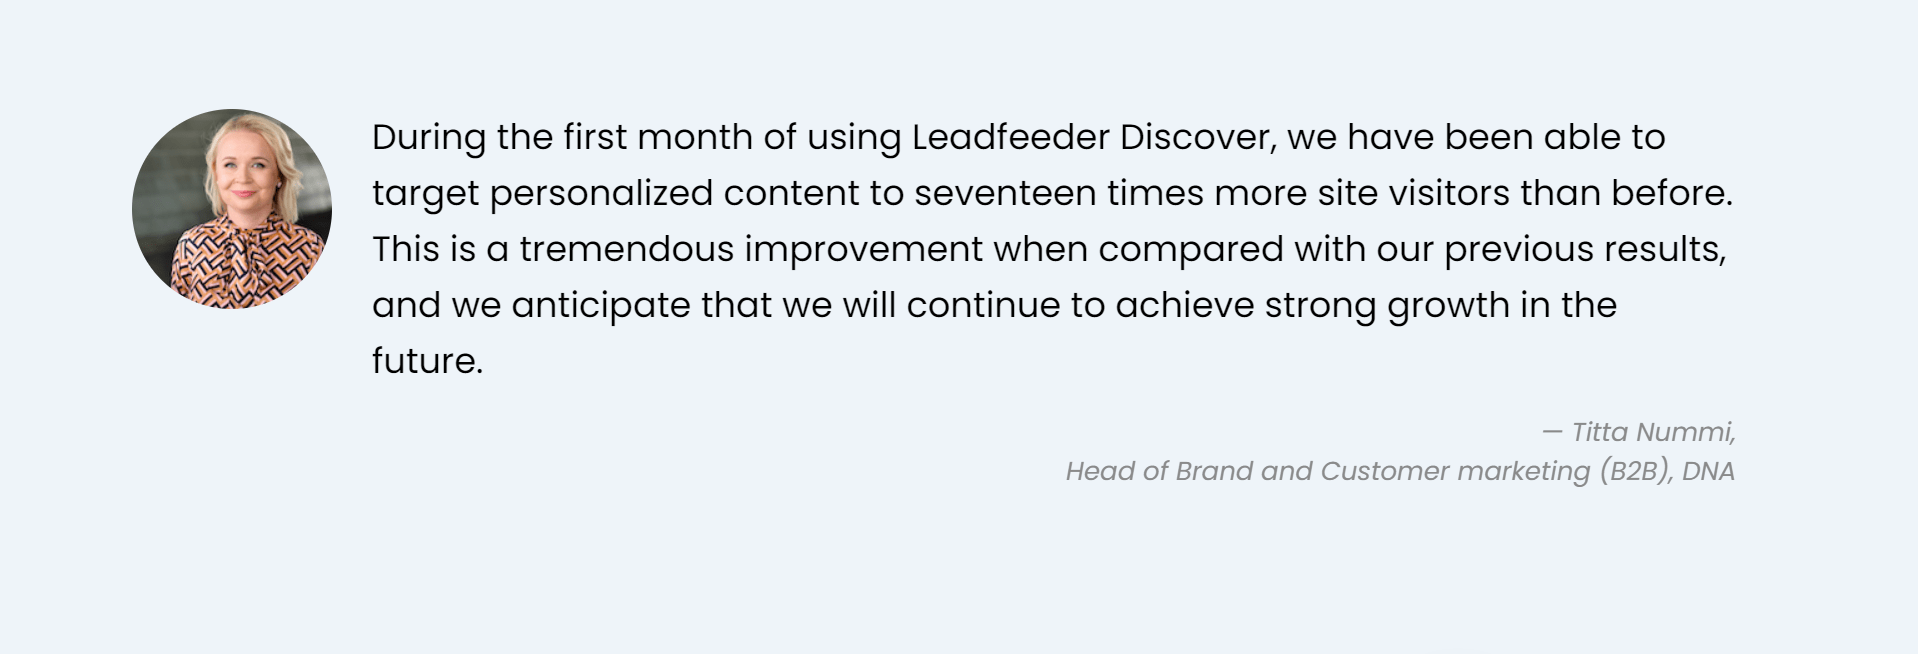 Leadfeeder discover